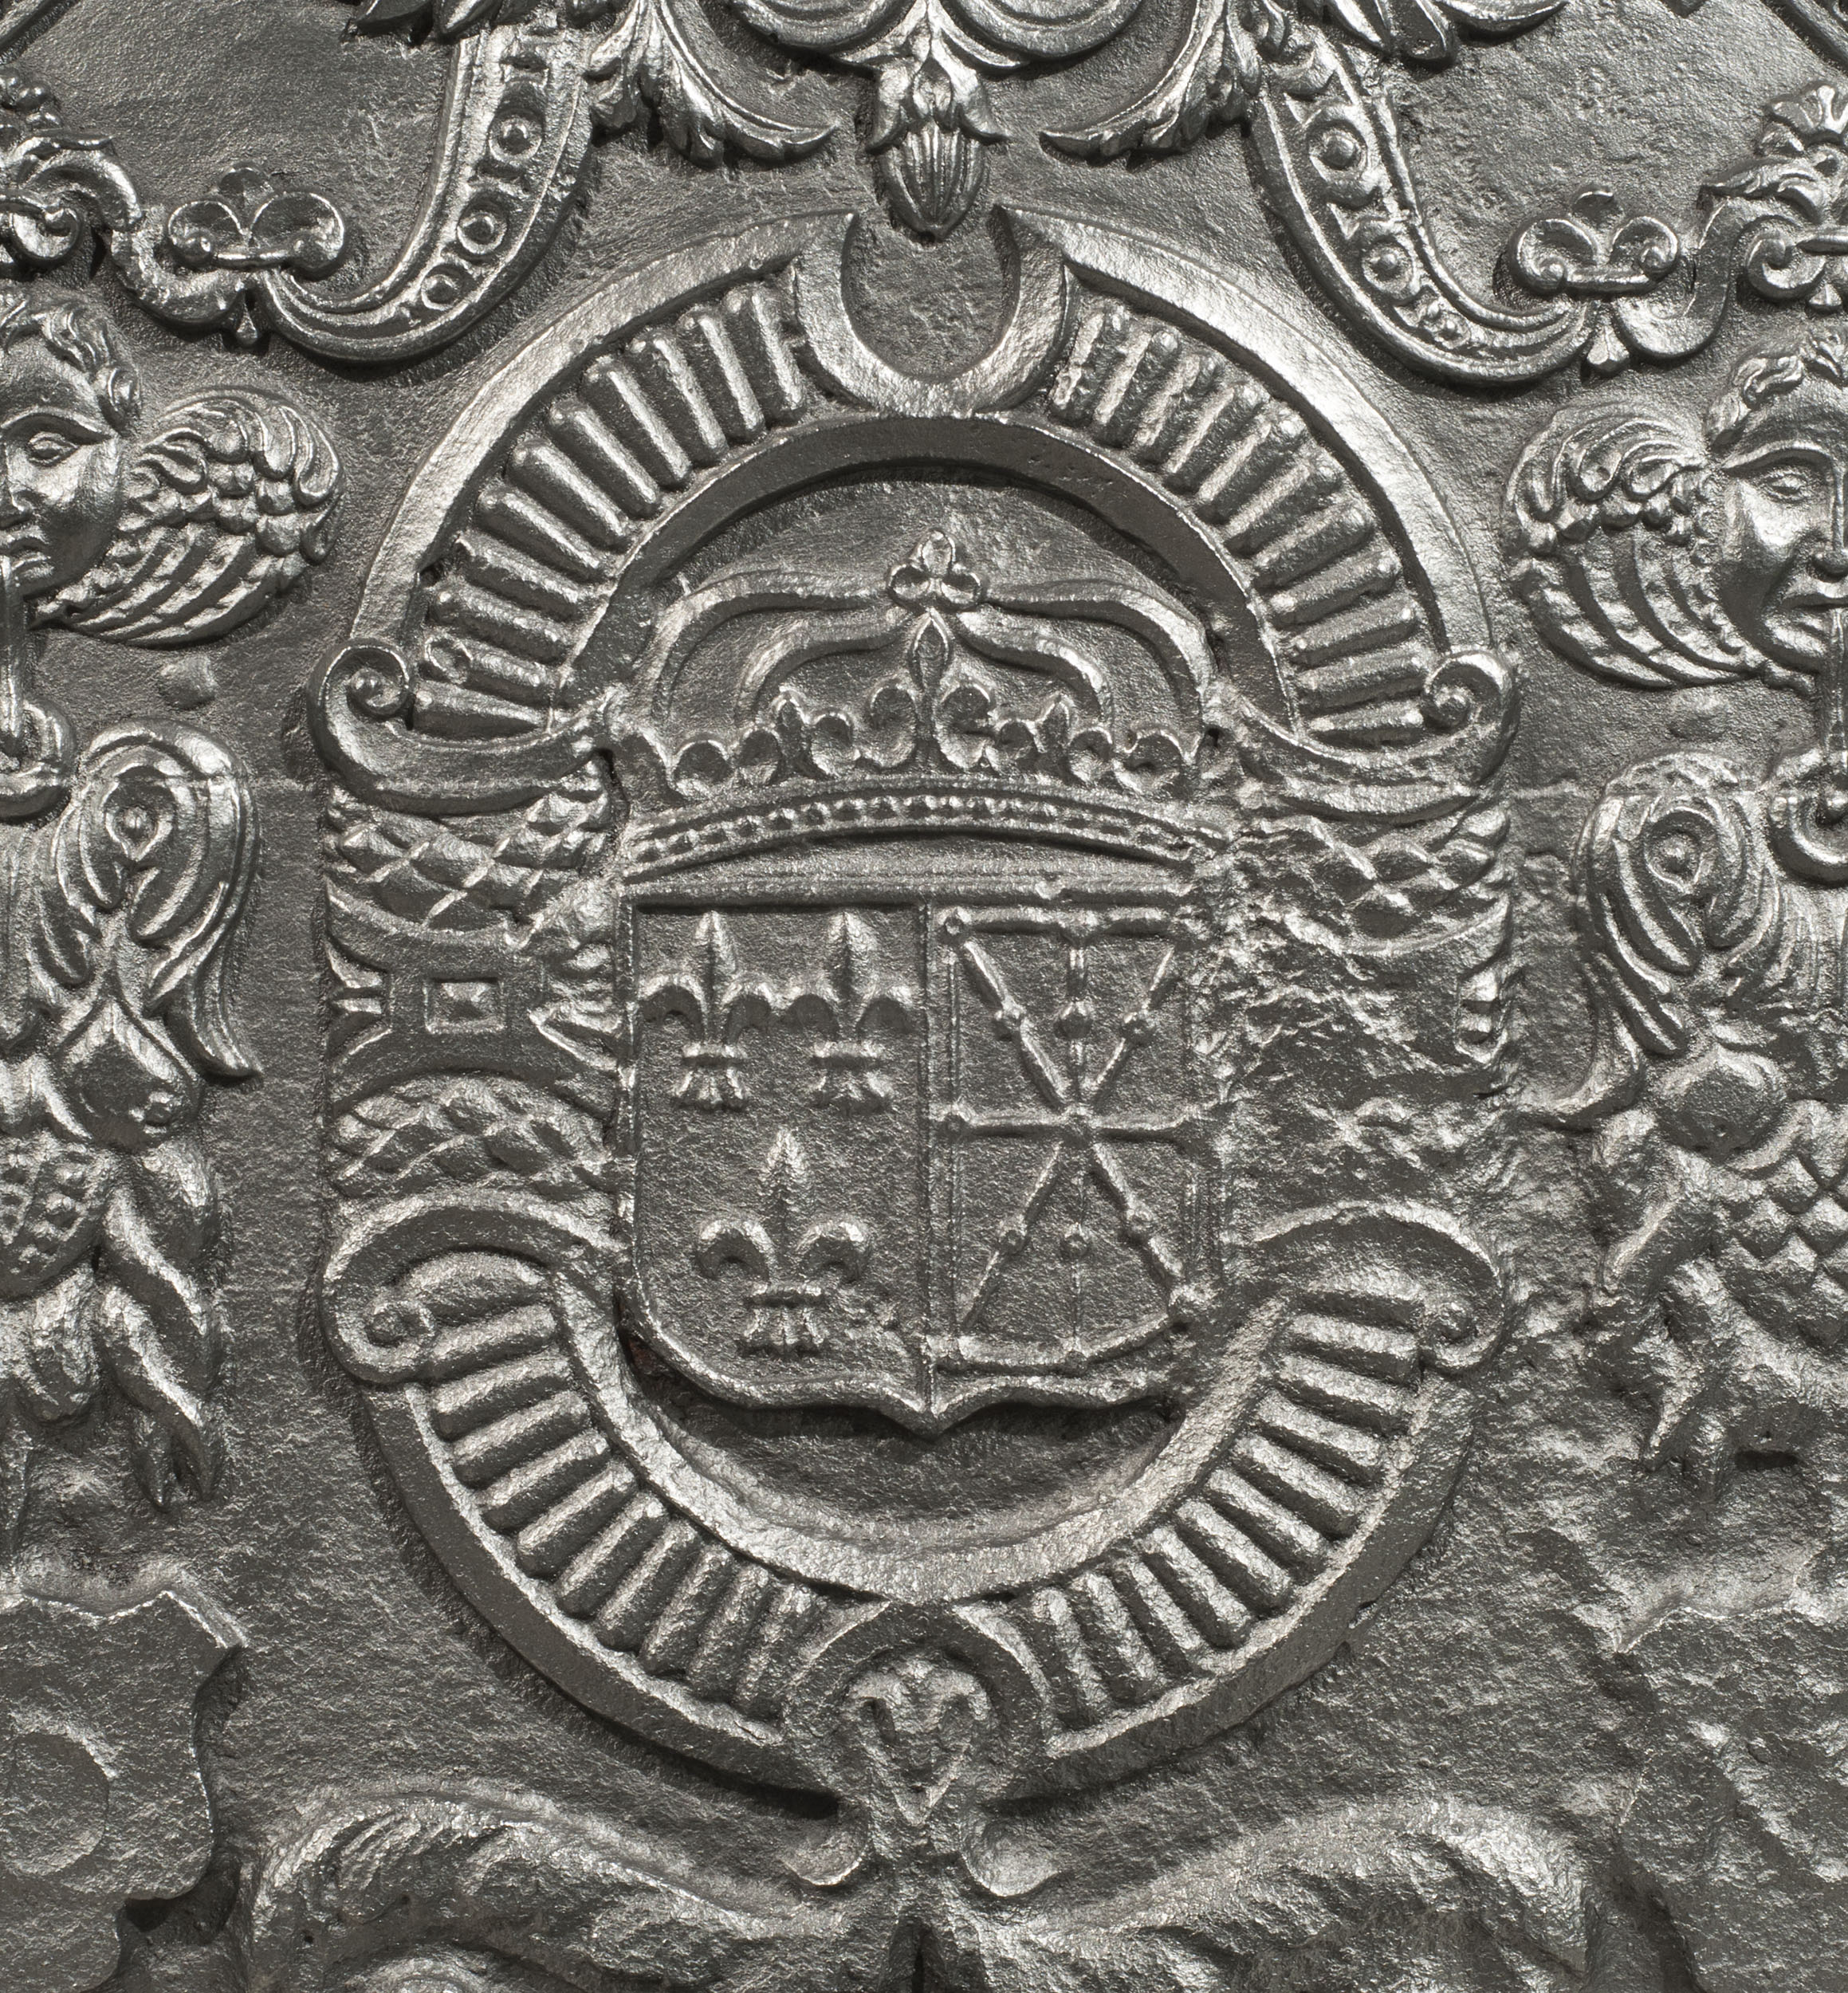 An Antique French Heraldic Fireback